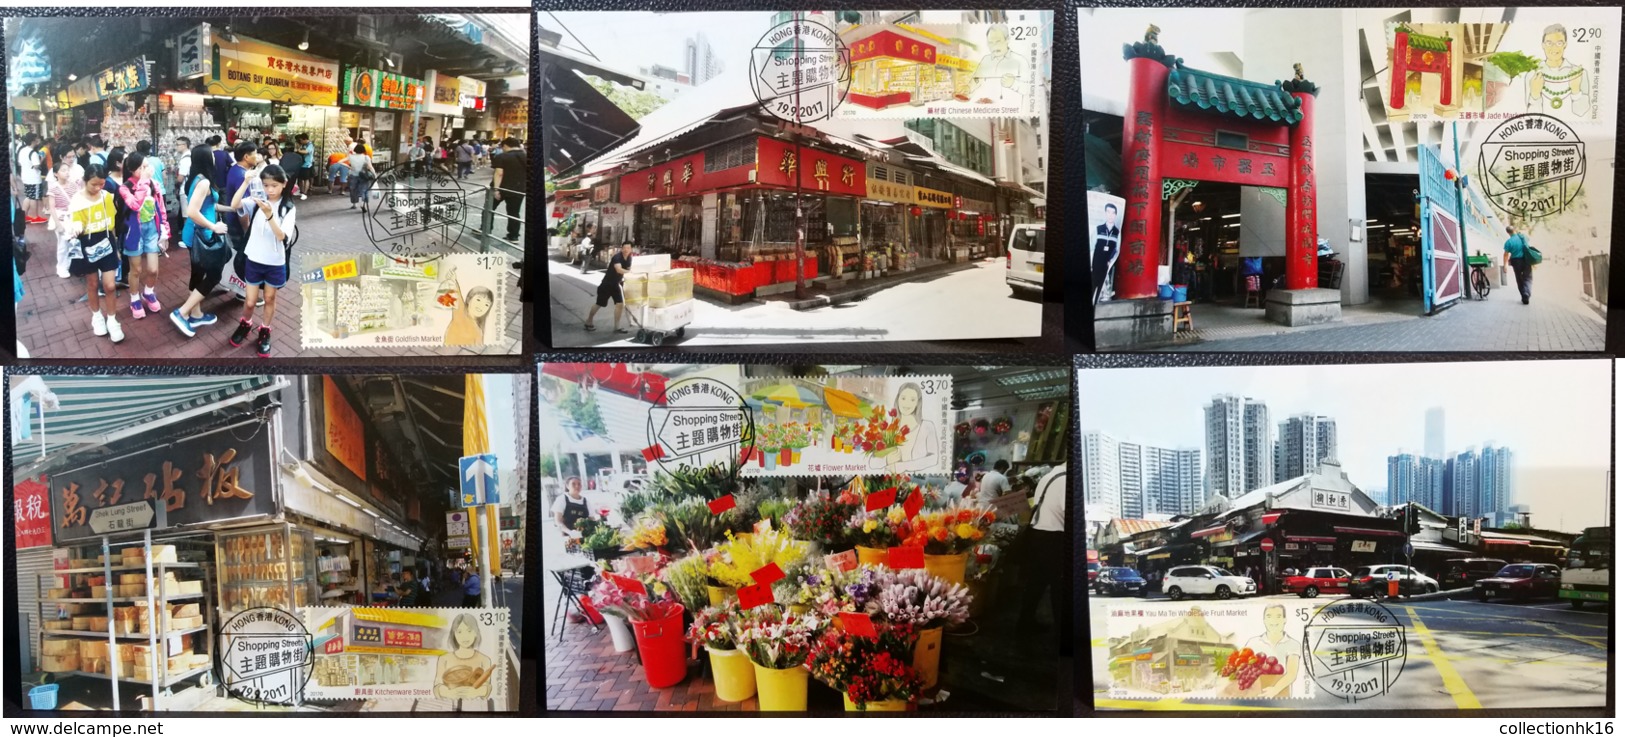 Hong Kong Shopping Streets (Fruit, Flower, Jade ...) 2017 Hong Kong Maximum Card MC Set (Pictorial Postmark) (6 Cards) - Cartoline Maximum